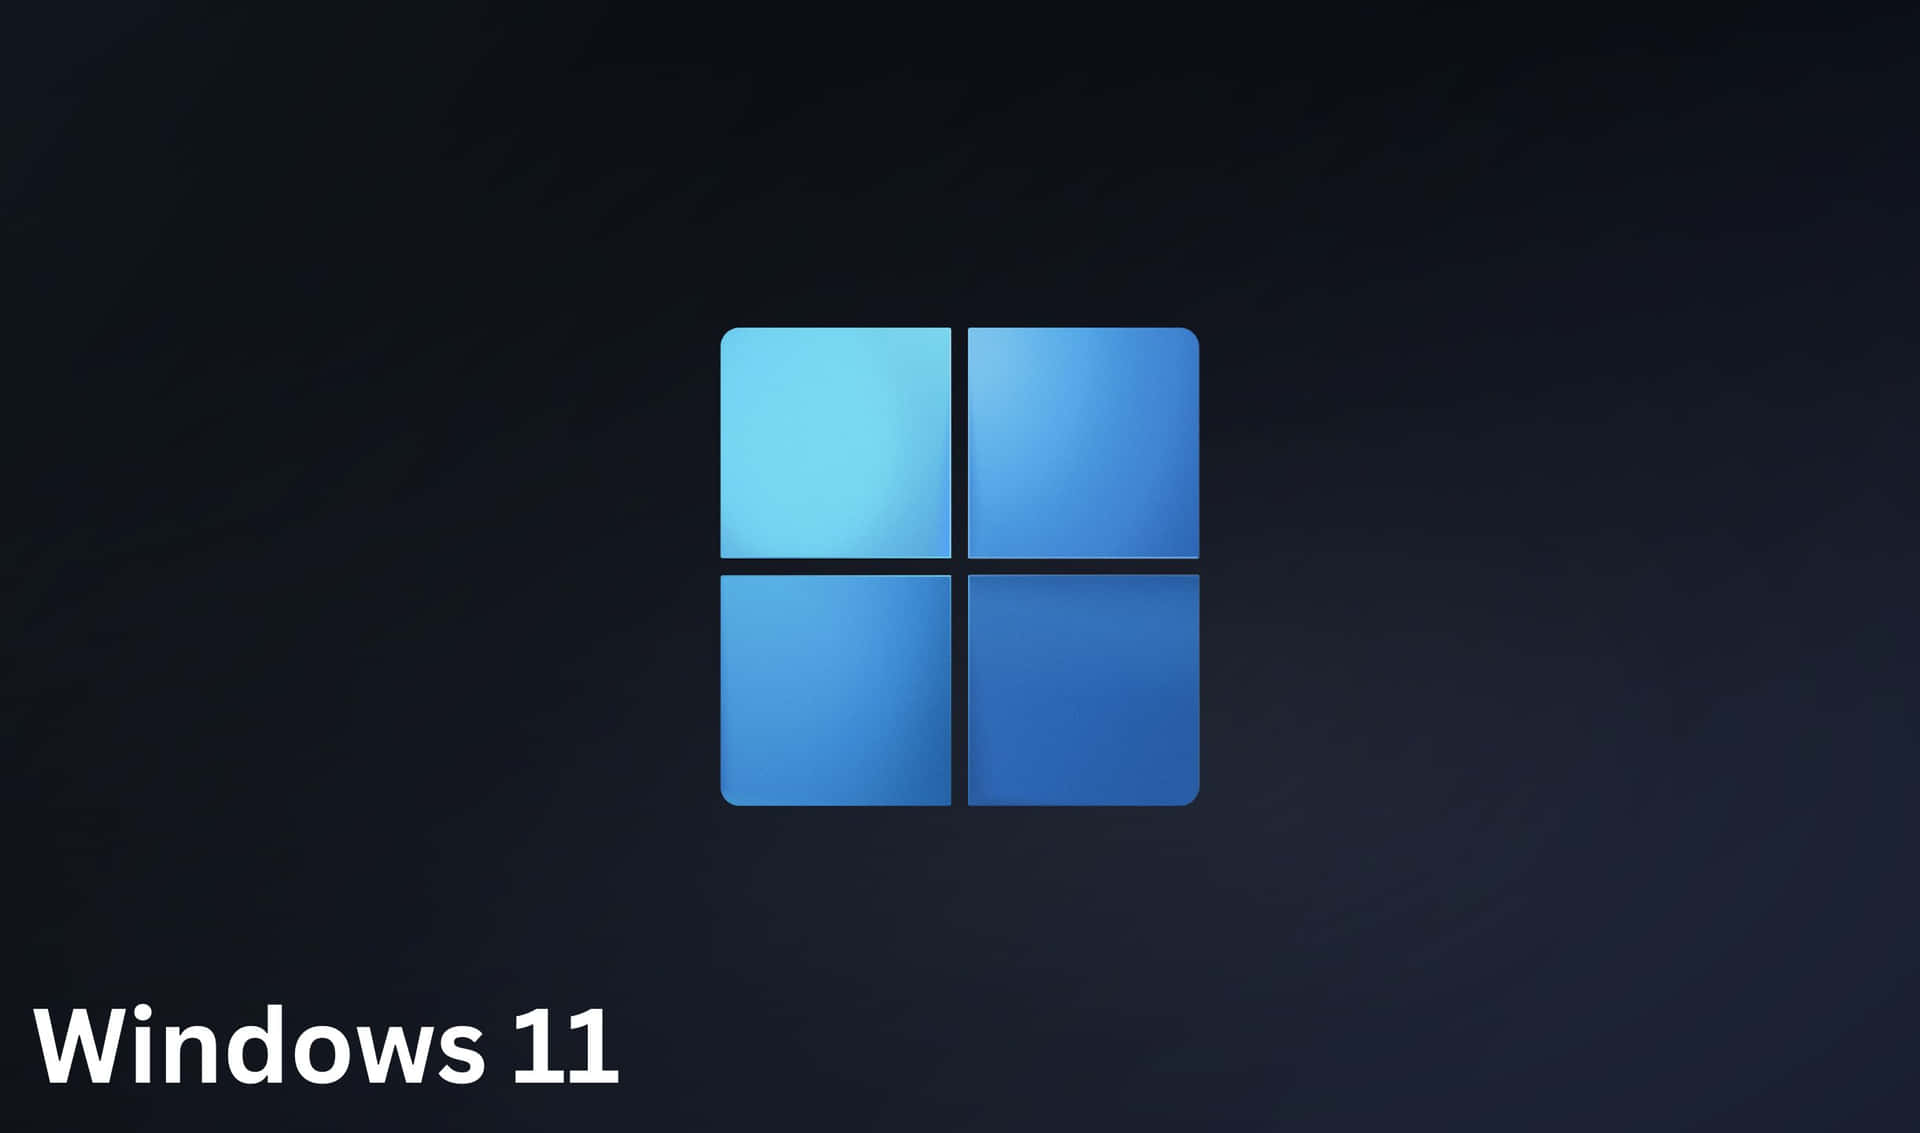 Windows 10 Logo With Blue Squares